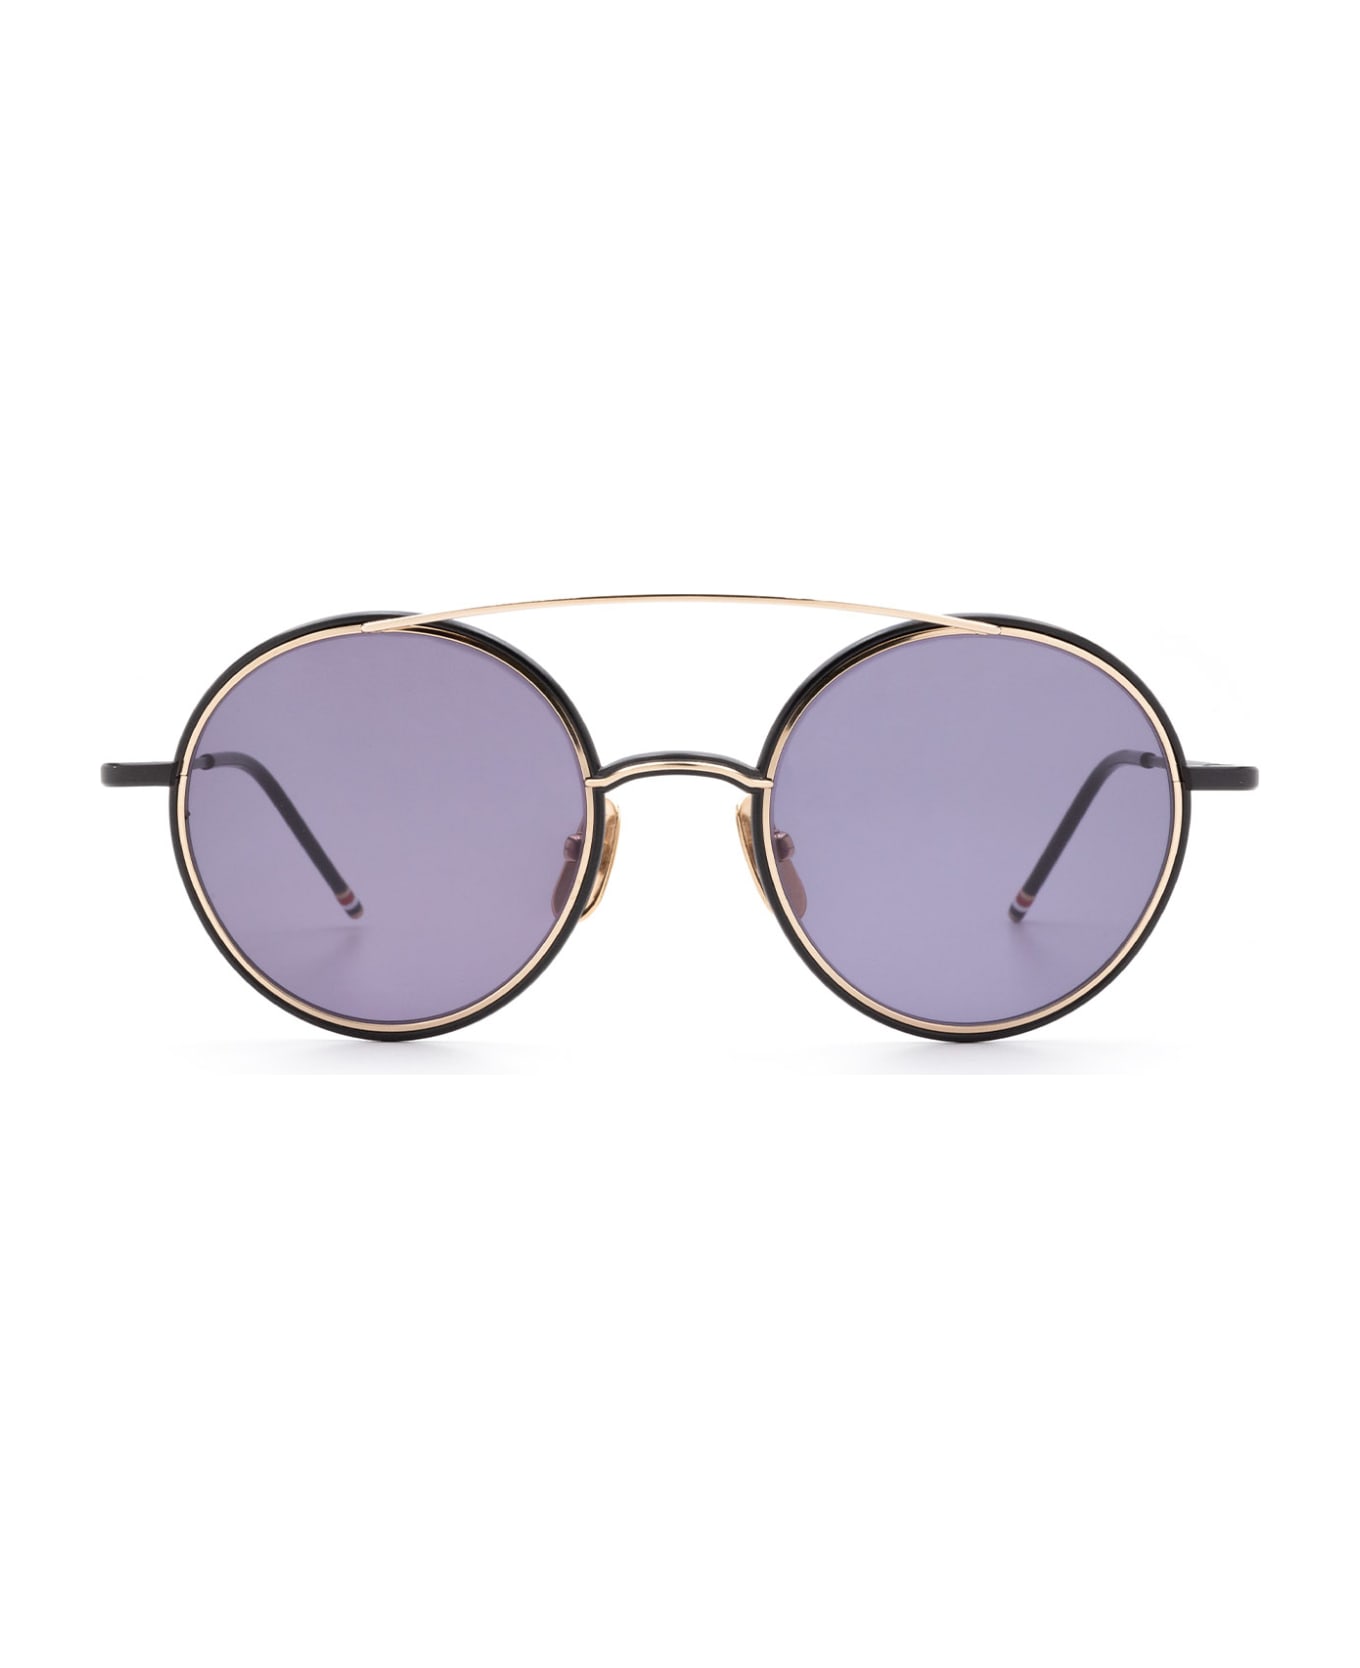 Thom Browne Tb108 A-t-blk-gld Sunglasses - A-T-BLK-GLD サングラス